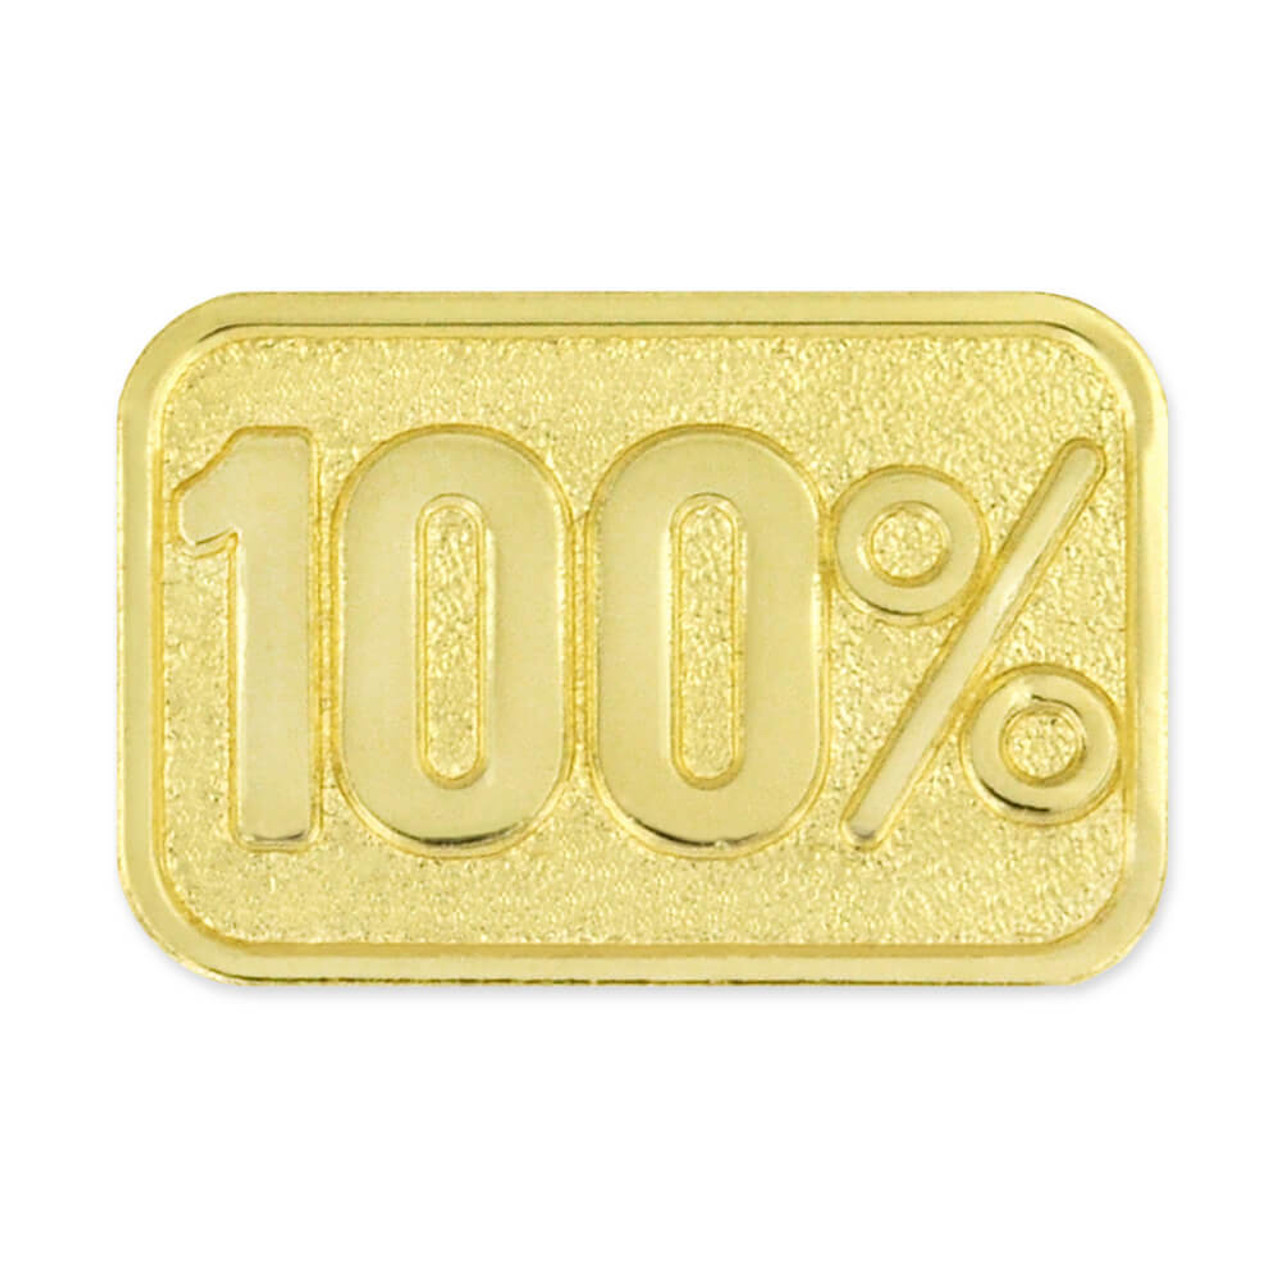 PrintGlobe 100 Custom Round Magnetic Lapel Pins - Gold